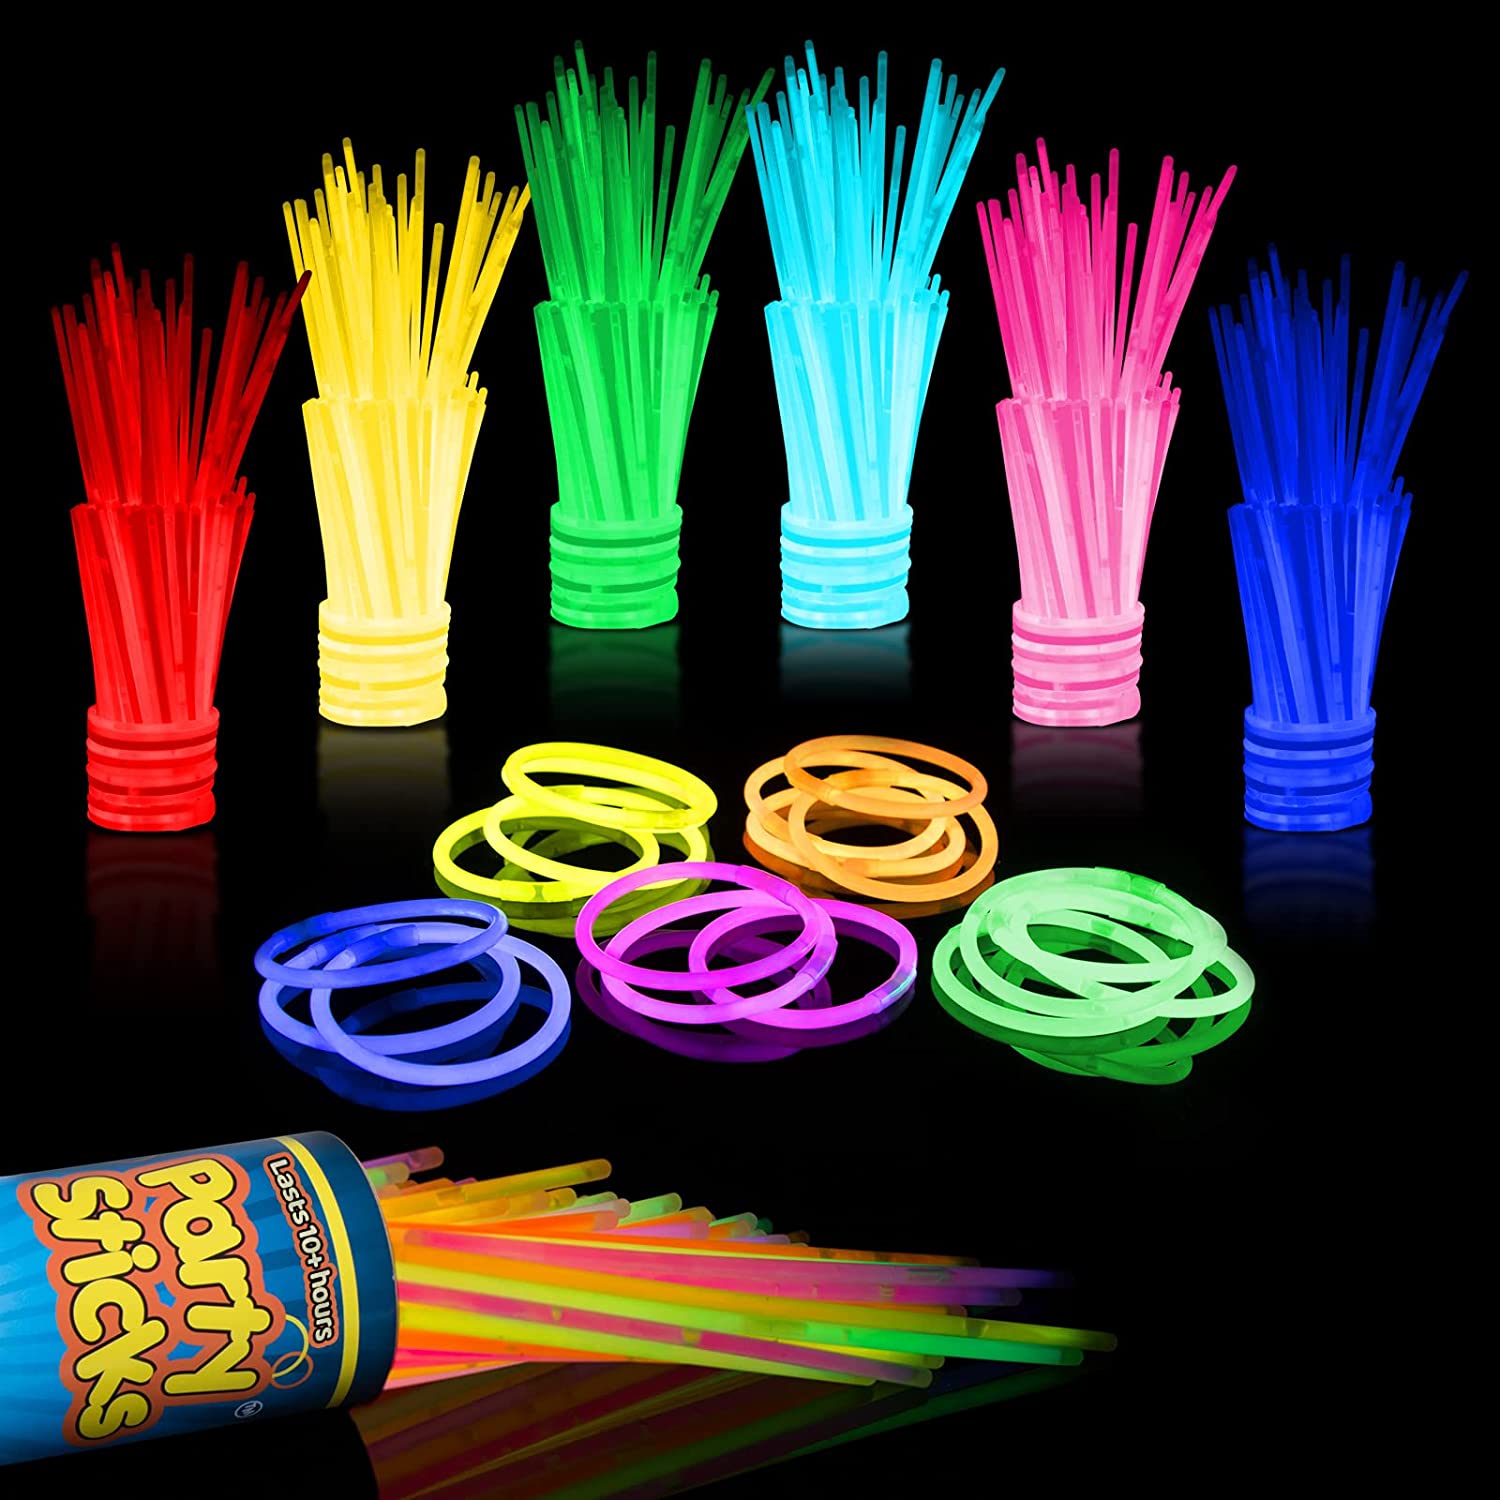 Toptan Glow Stick Fosforlu Neon Çubuk 100 Lü Paket, Glow Stick Fosforlu  Neon Çubuk 100 Lü Paket toptan, Glow Stick Fosforlu Neon Çubuk 100 Lü Paket  İthalatçısı